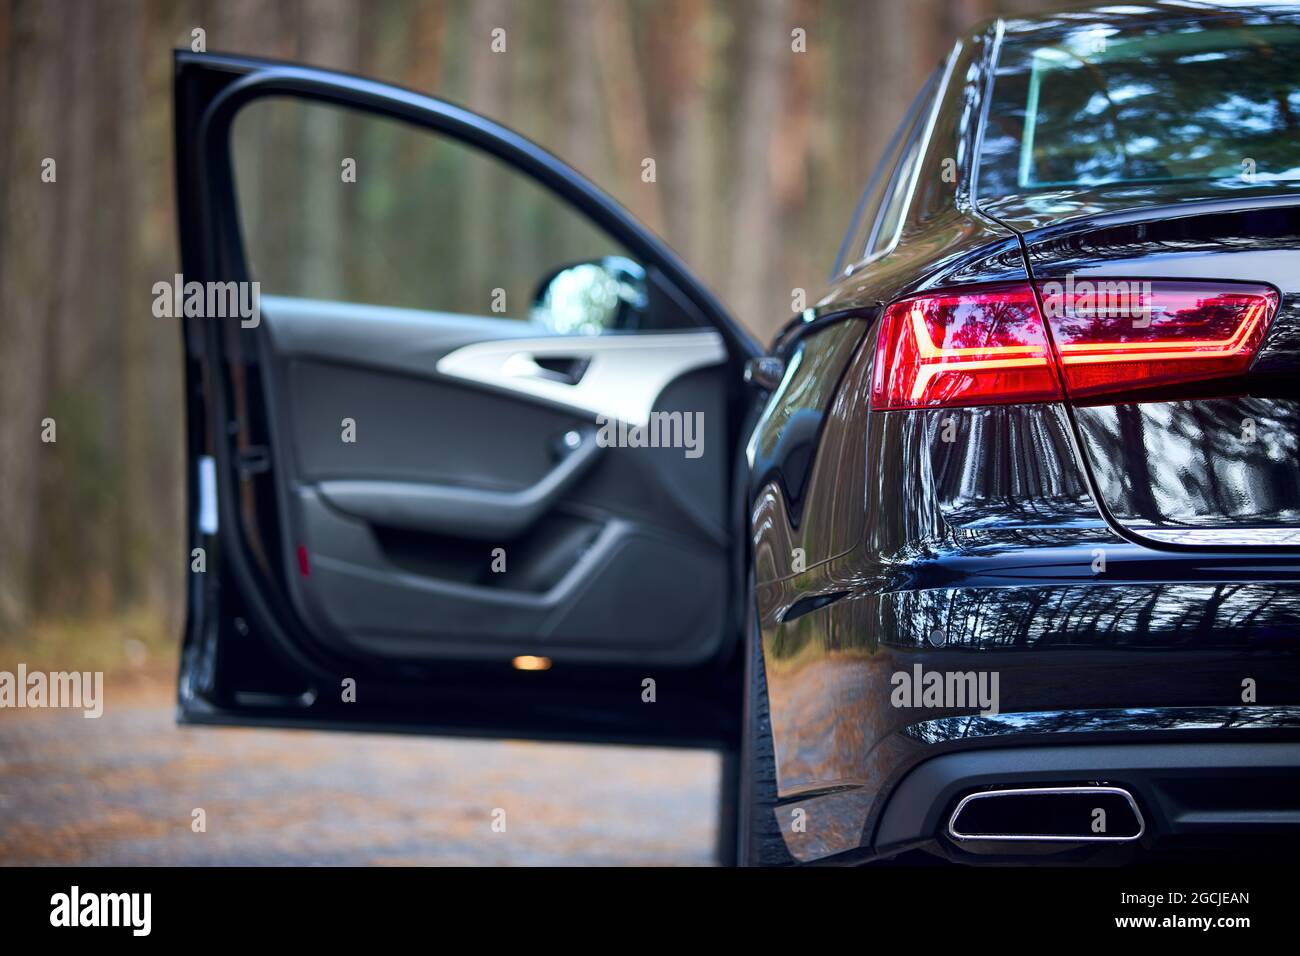 https://c8.alamy.com/comp/2GCJEAN/grodno-belarus-december-2019-audi-a6-4g-c7-2016-left-back-rearlight-of-black-metallic-car-shot-closeup-with-opened-door-out-of-focus-on-forest-2GCJEAN.jpg